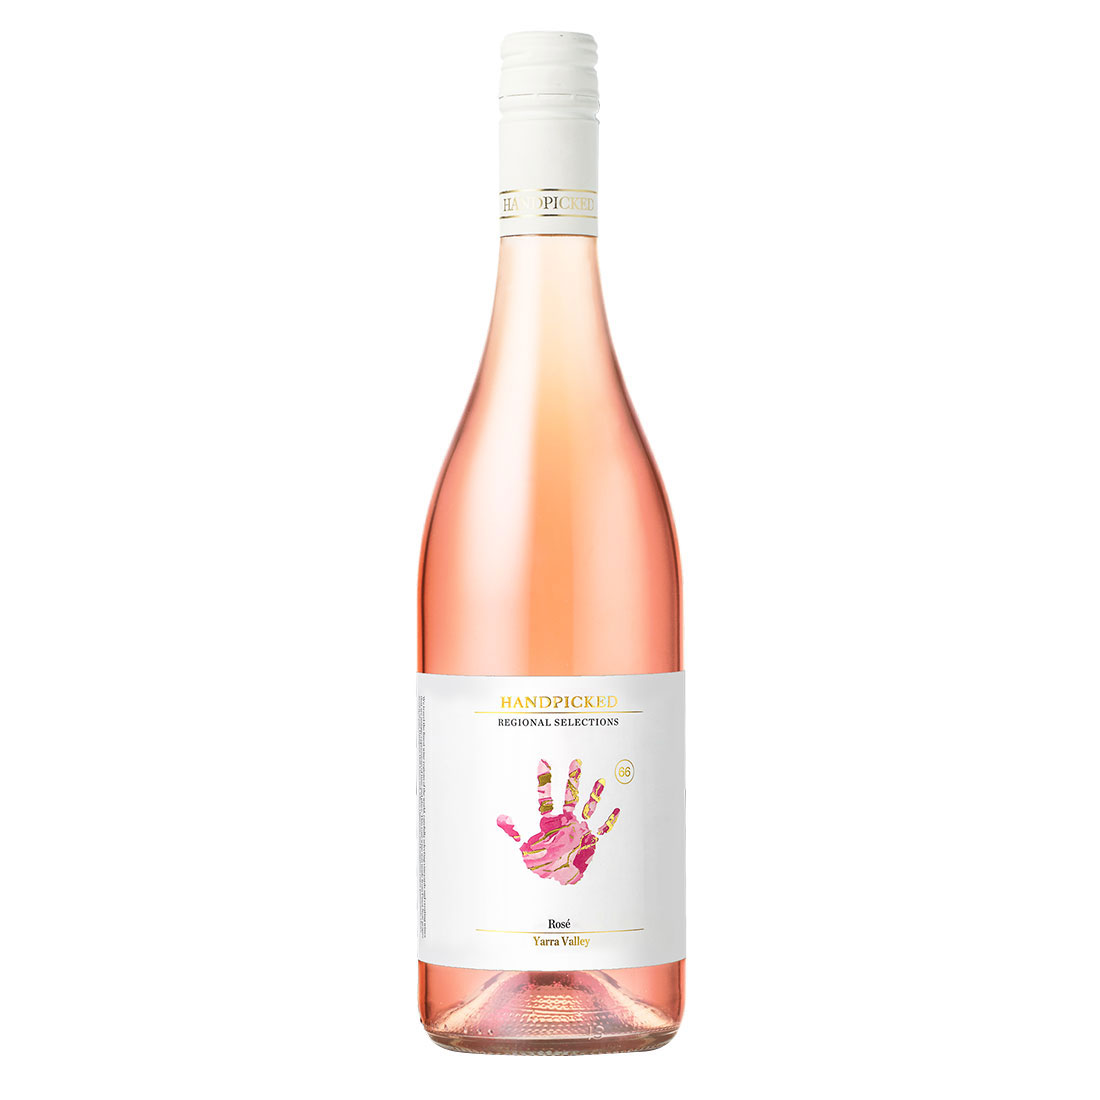 LB_Bottle-Handpicked-Regional-Selection-Rosé-2020